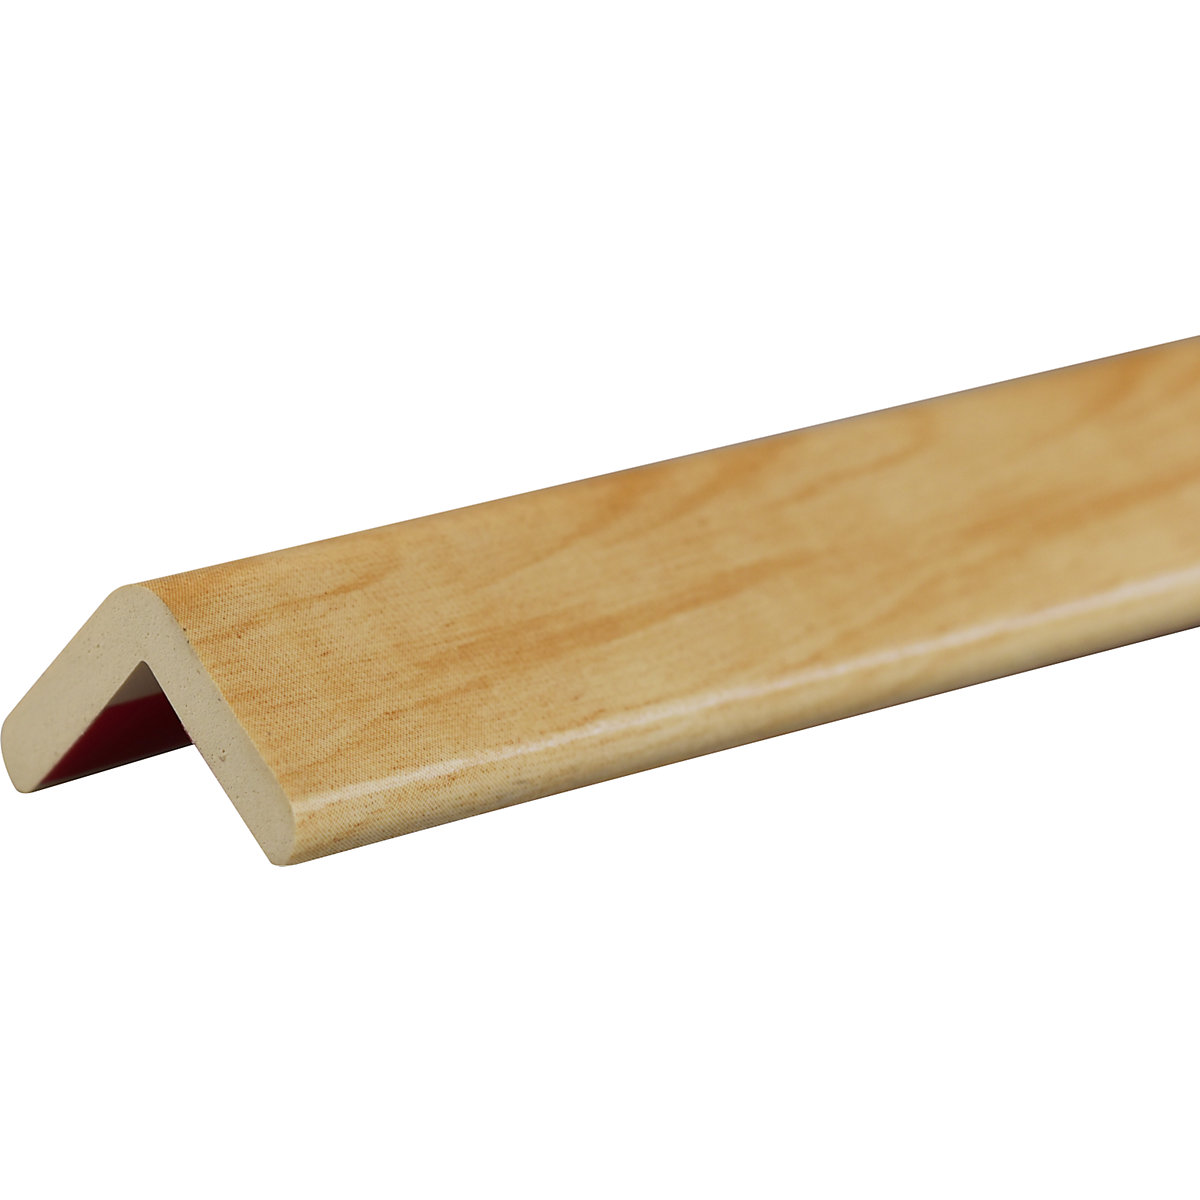 Knuffi®-hoekbescherming – SHG, type H, stuk van 1 m, gecoat hout naturel-25